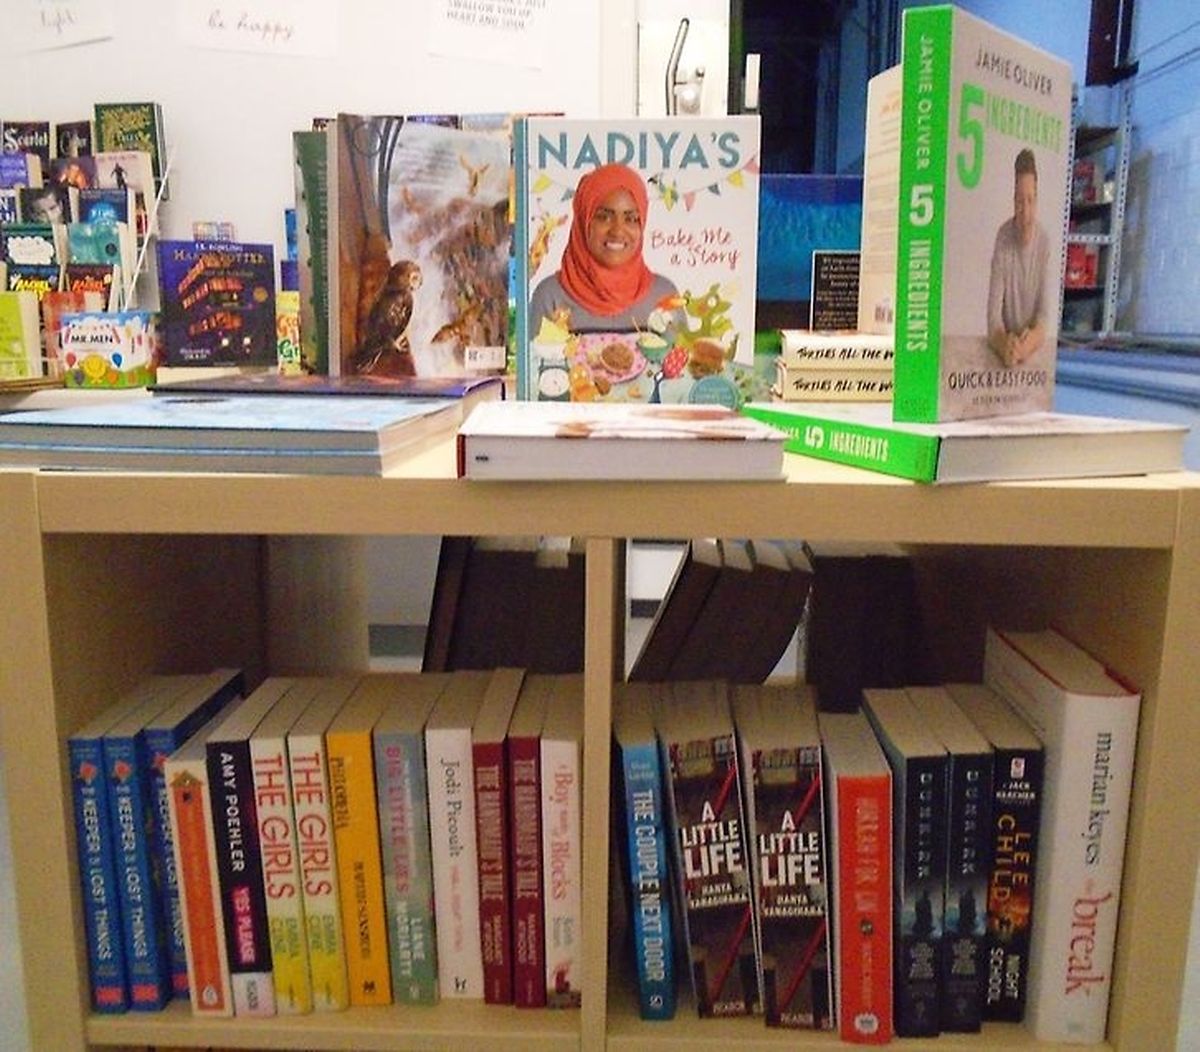 Books for adults & children Photo: Sarita Rao